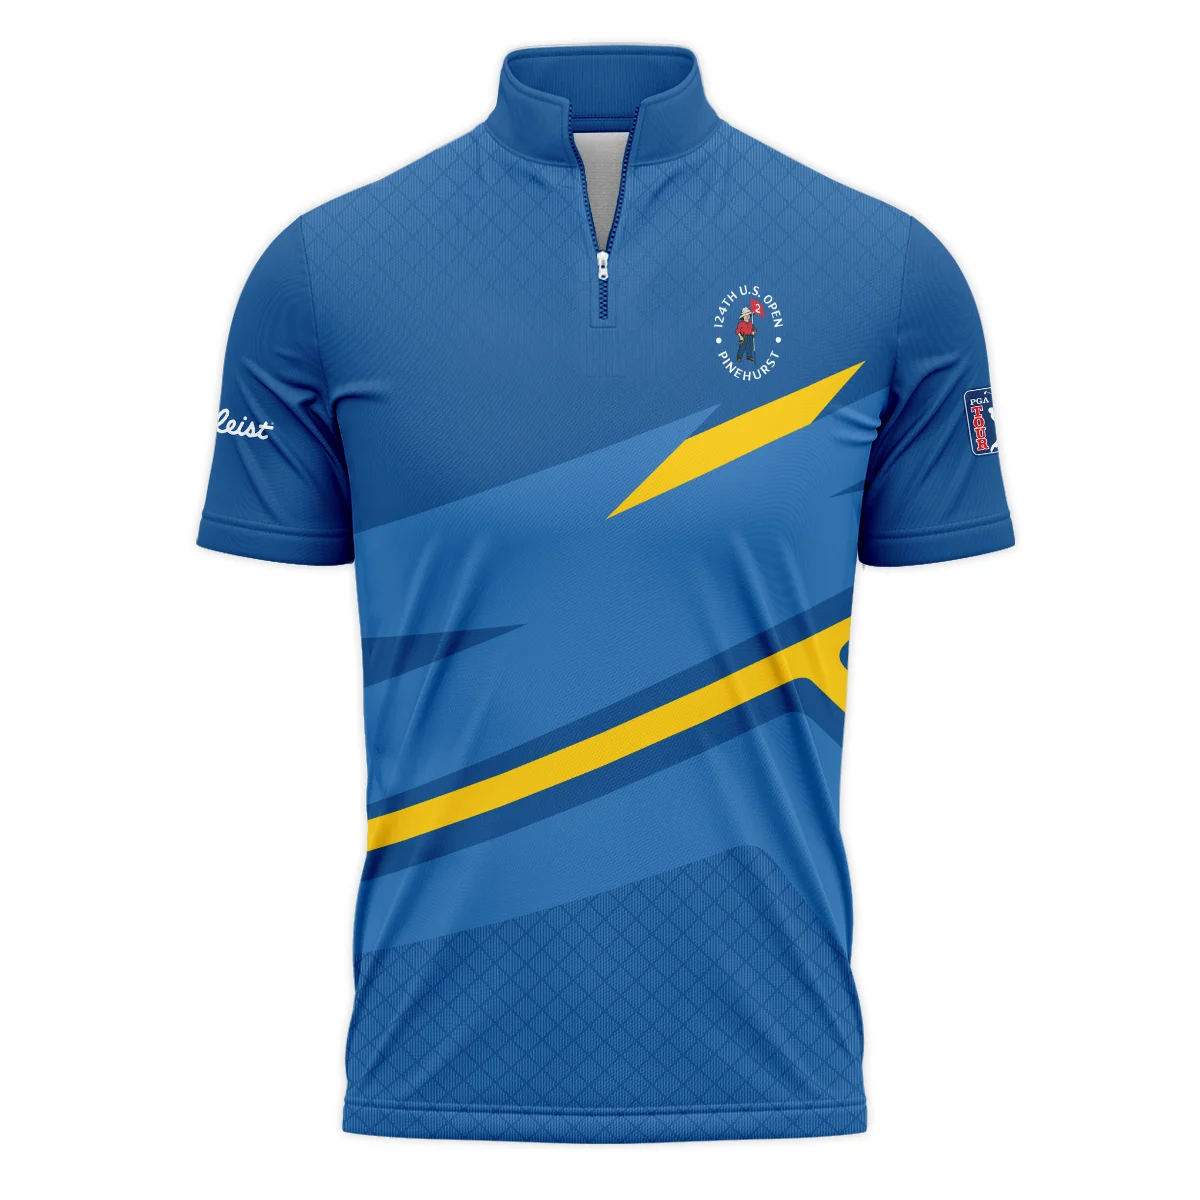 Titleist 124th U.S. Open Pinehurst Blue Yellow Mix Pattern Zipper Hoodie Shirt Style Classic